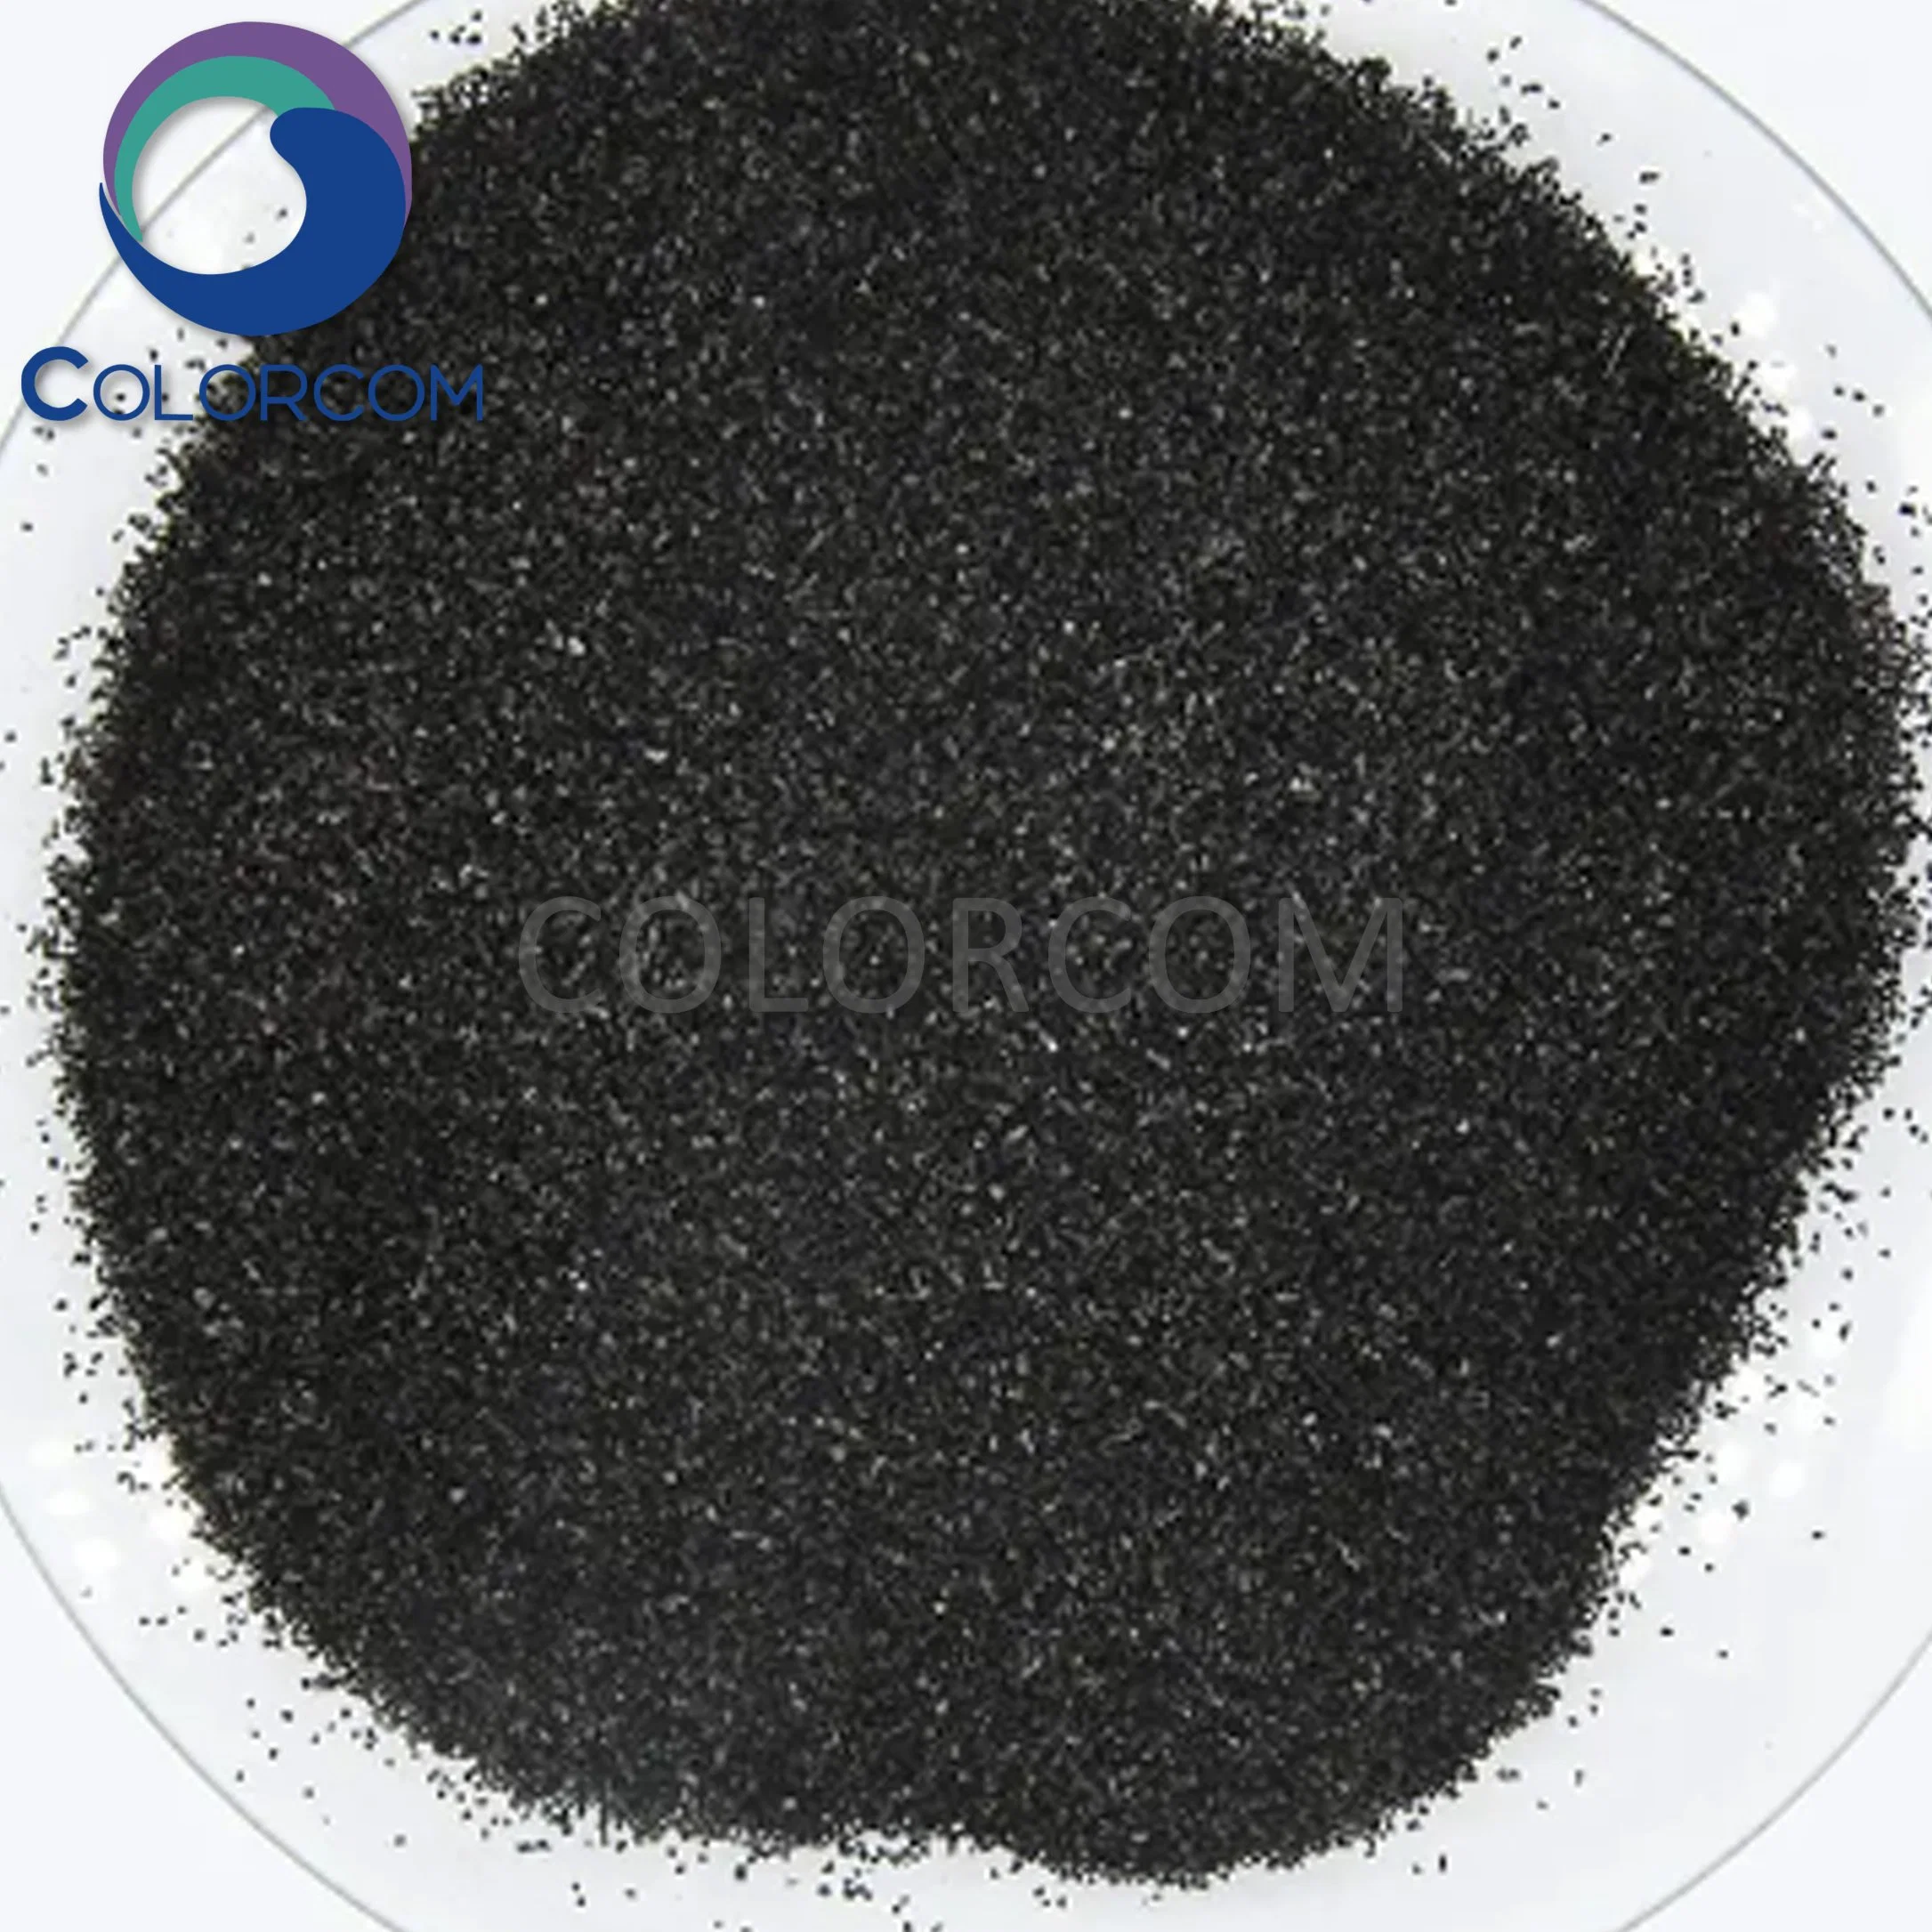 Pigment Carbon Black Equivalent to Printex 140V Black Pigment Black 7